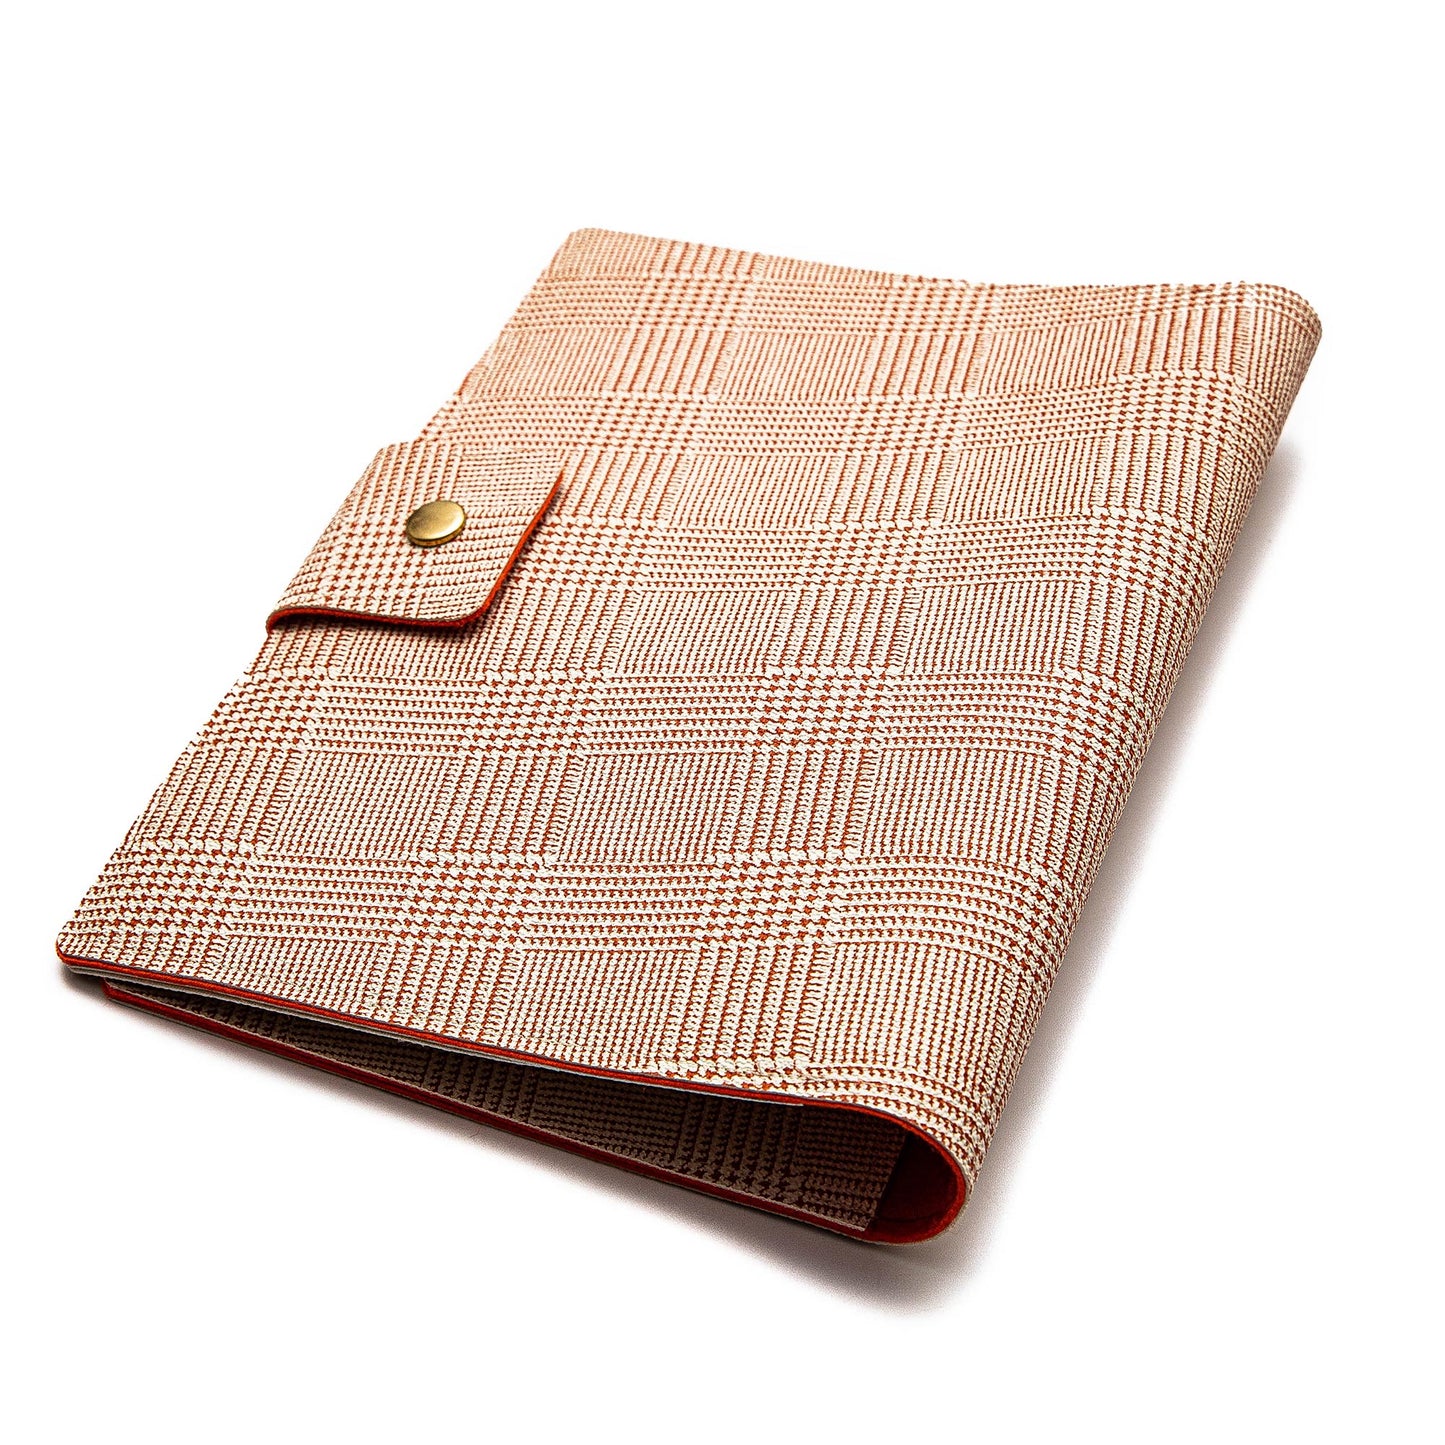 Handmade Folio Cover for iPad/Pro/Air - Cream and Orange Striped Faux Leather